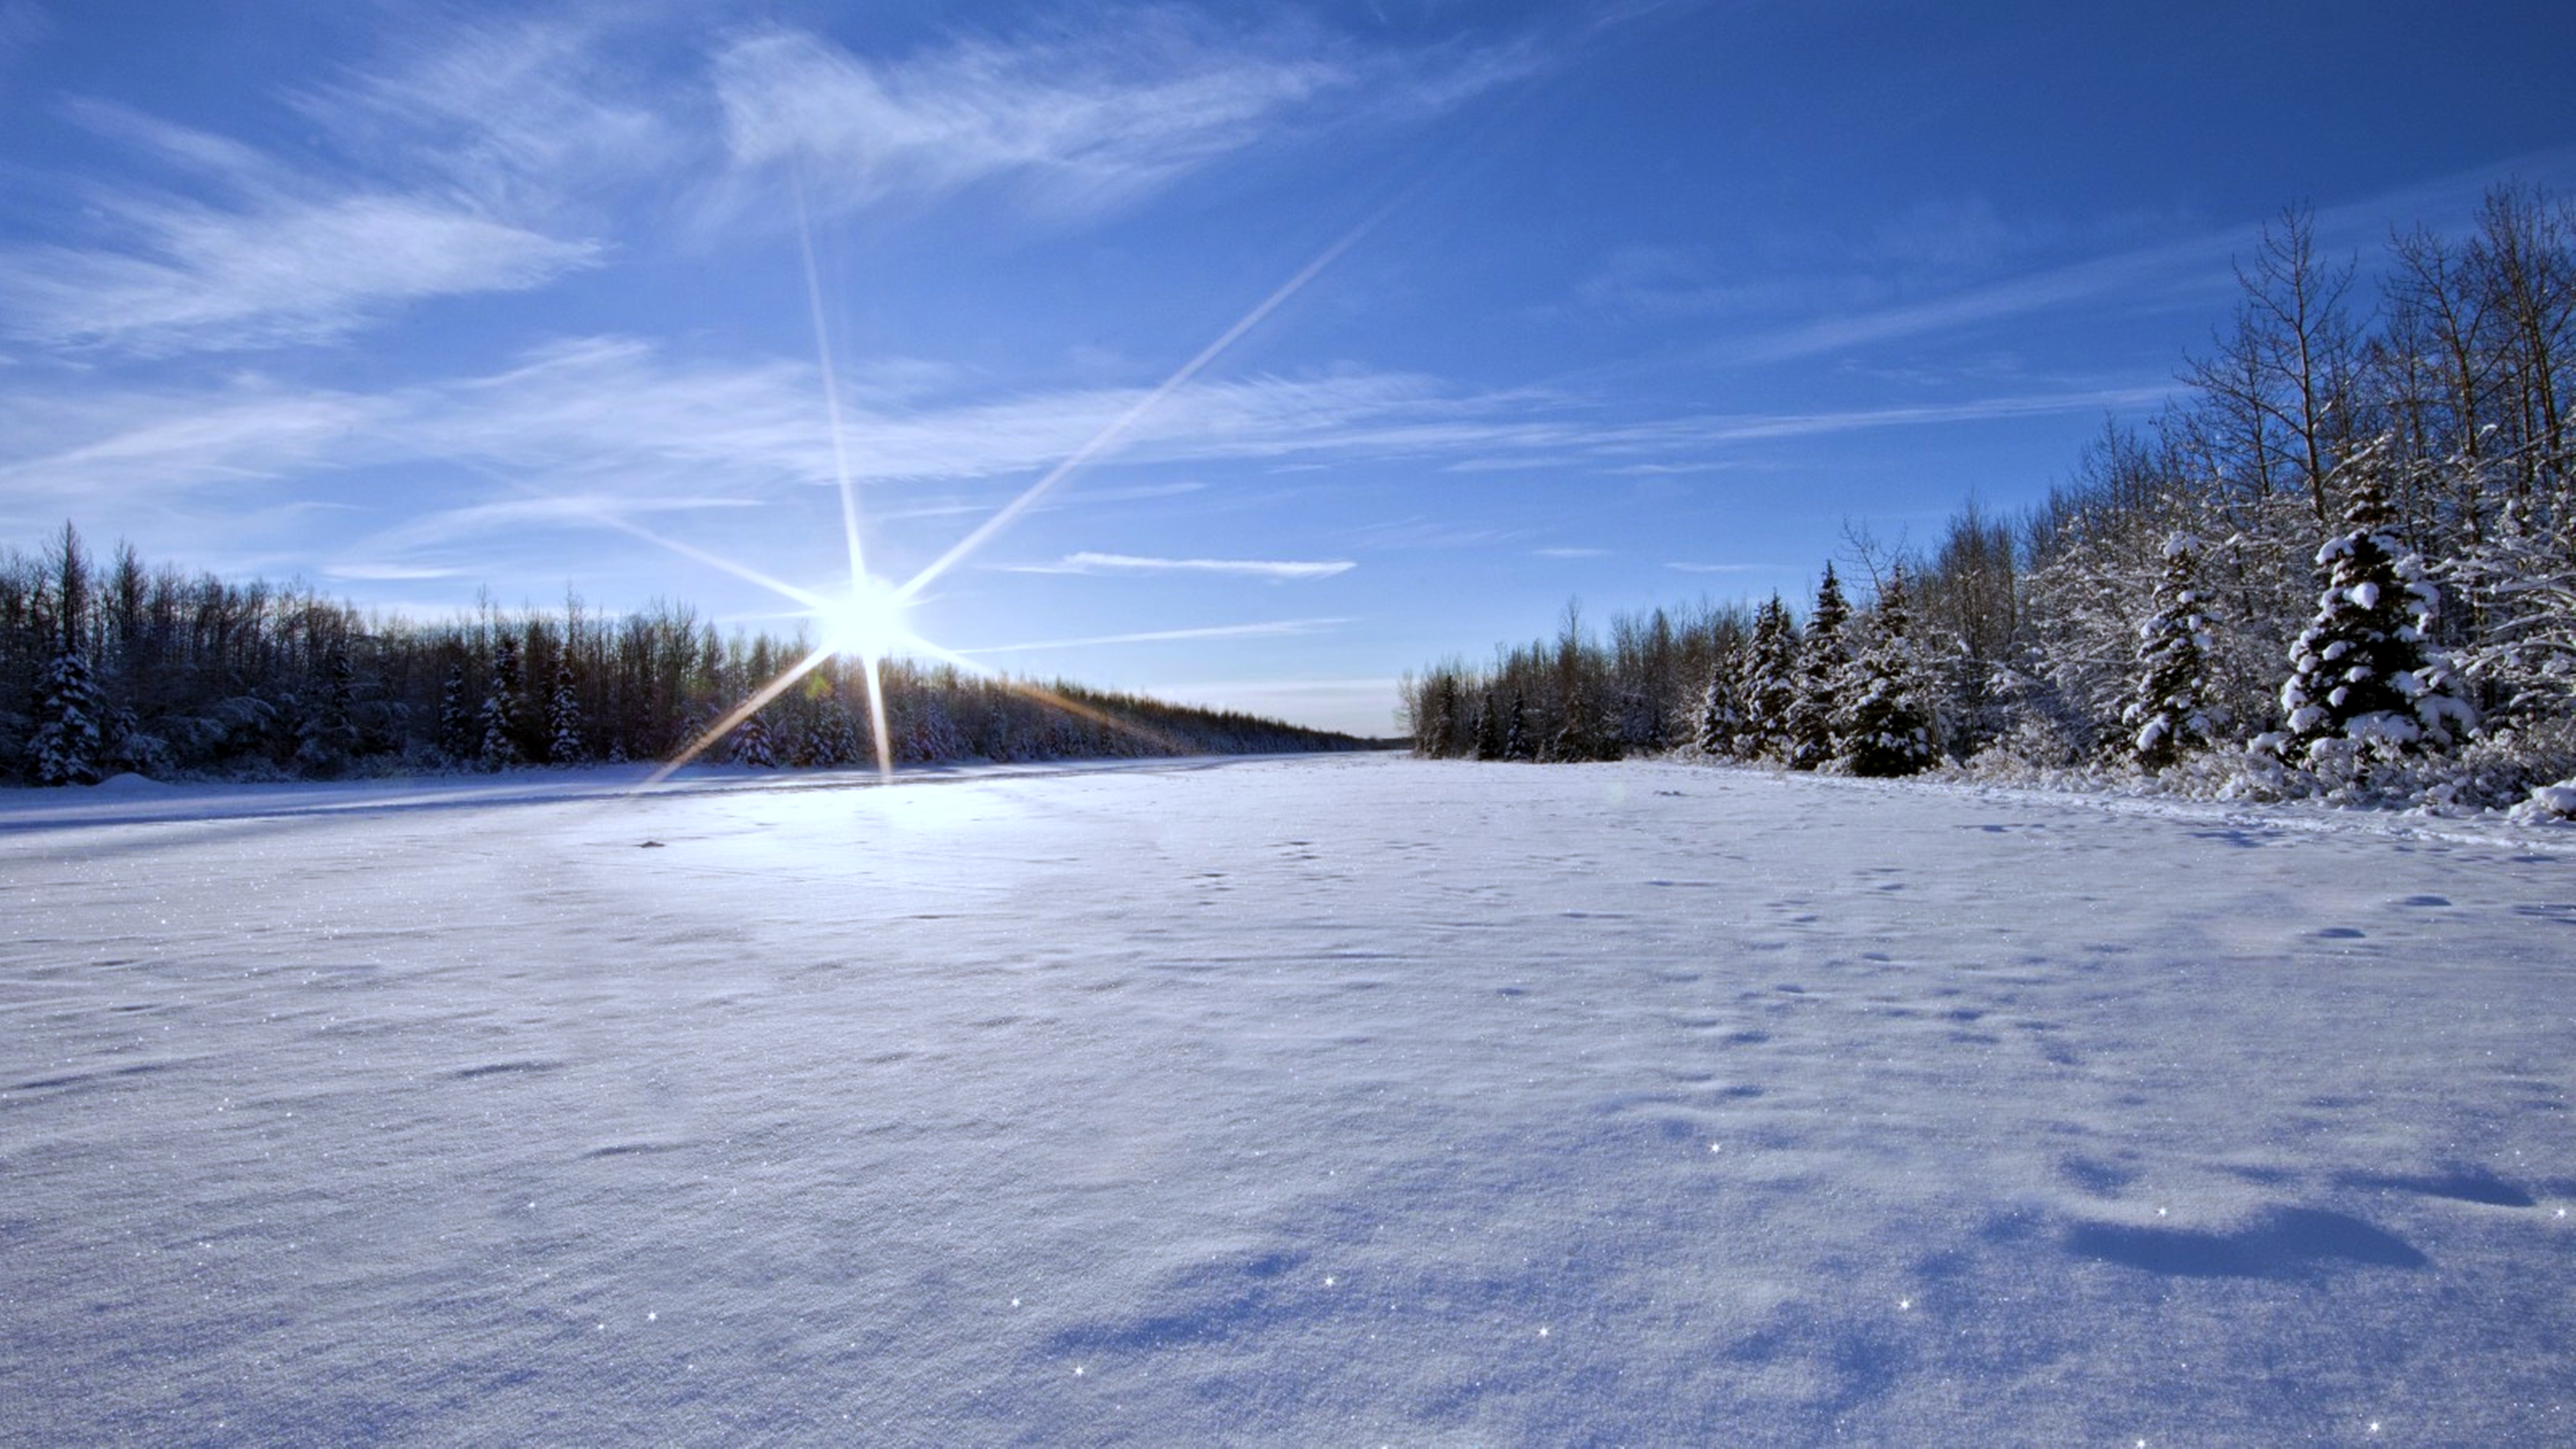 Snowy 4k Ultra HD Wallpaper | Background Image | 3840x2160
